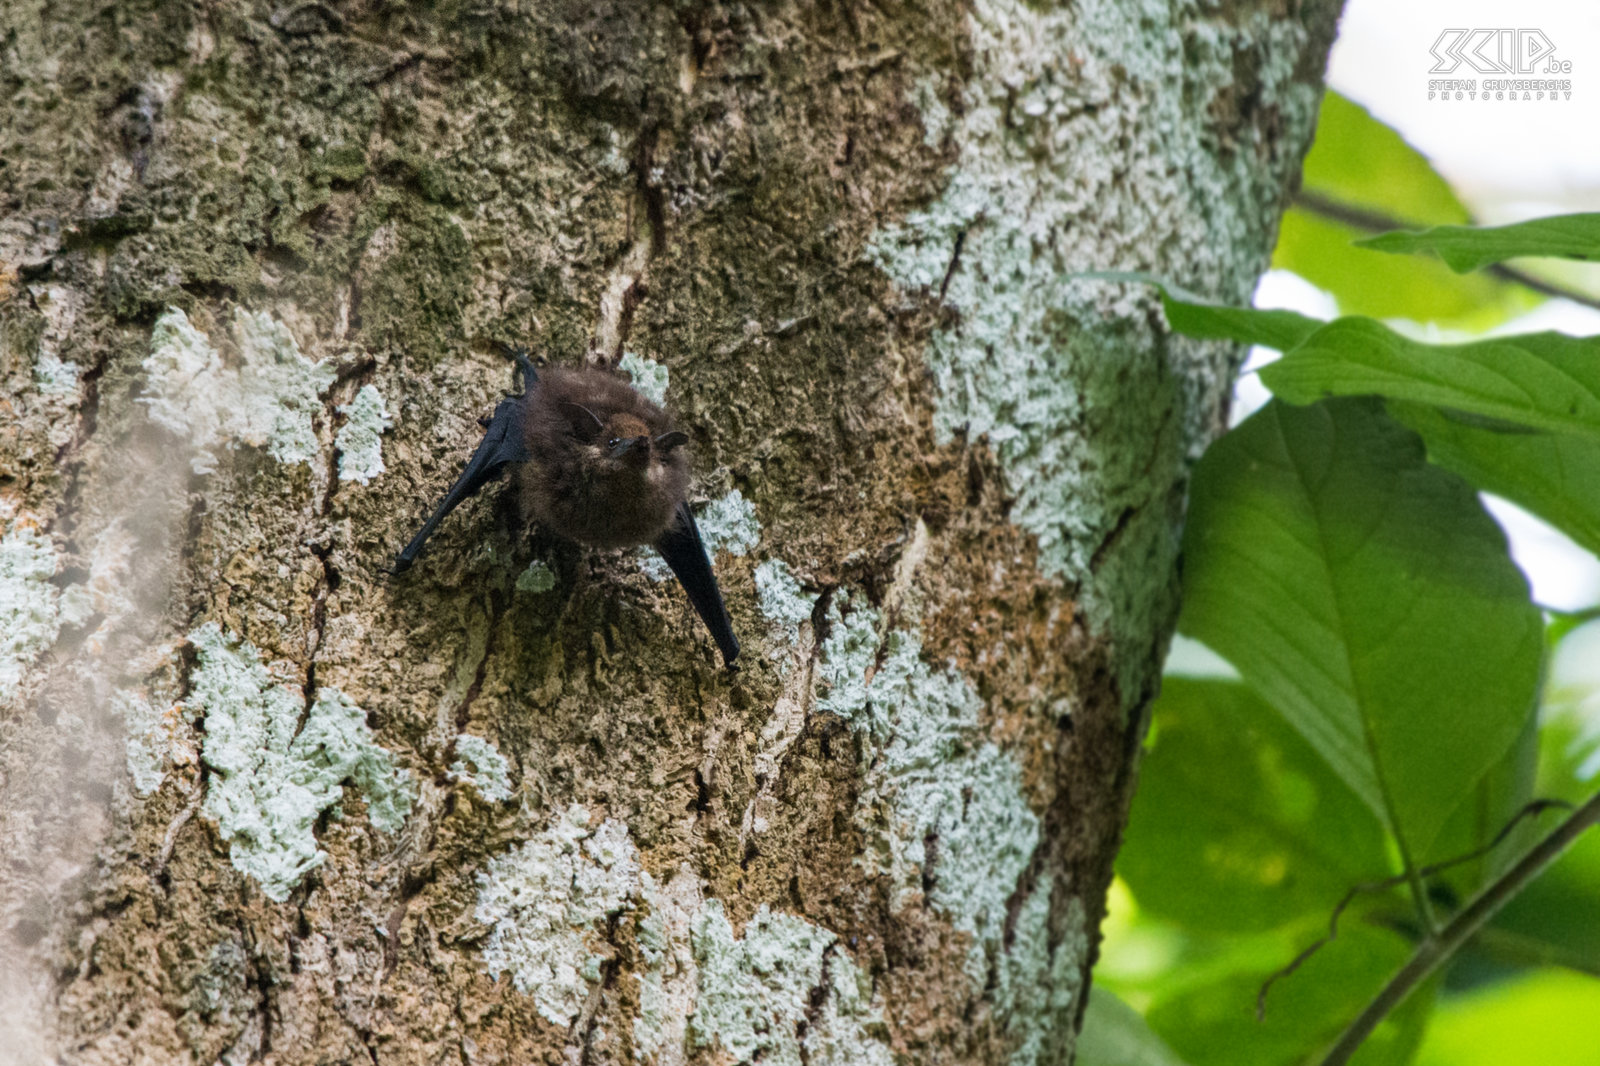 Carara - Sac-winged bat A sac-winged bat sleeping in a tree in Carara NP. Stefan Cruysberghs